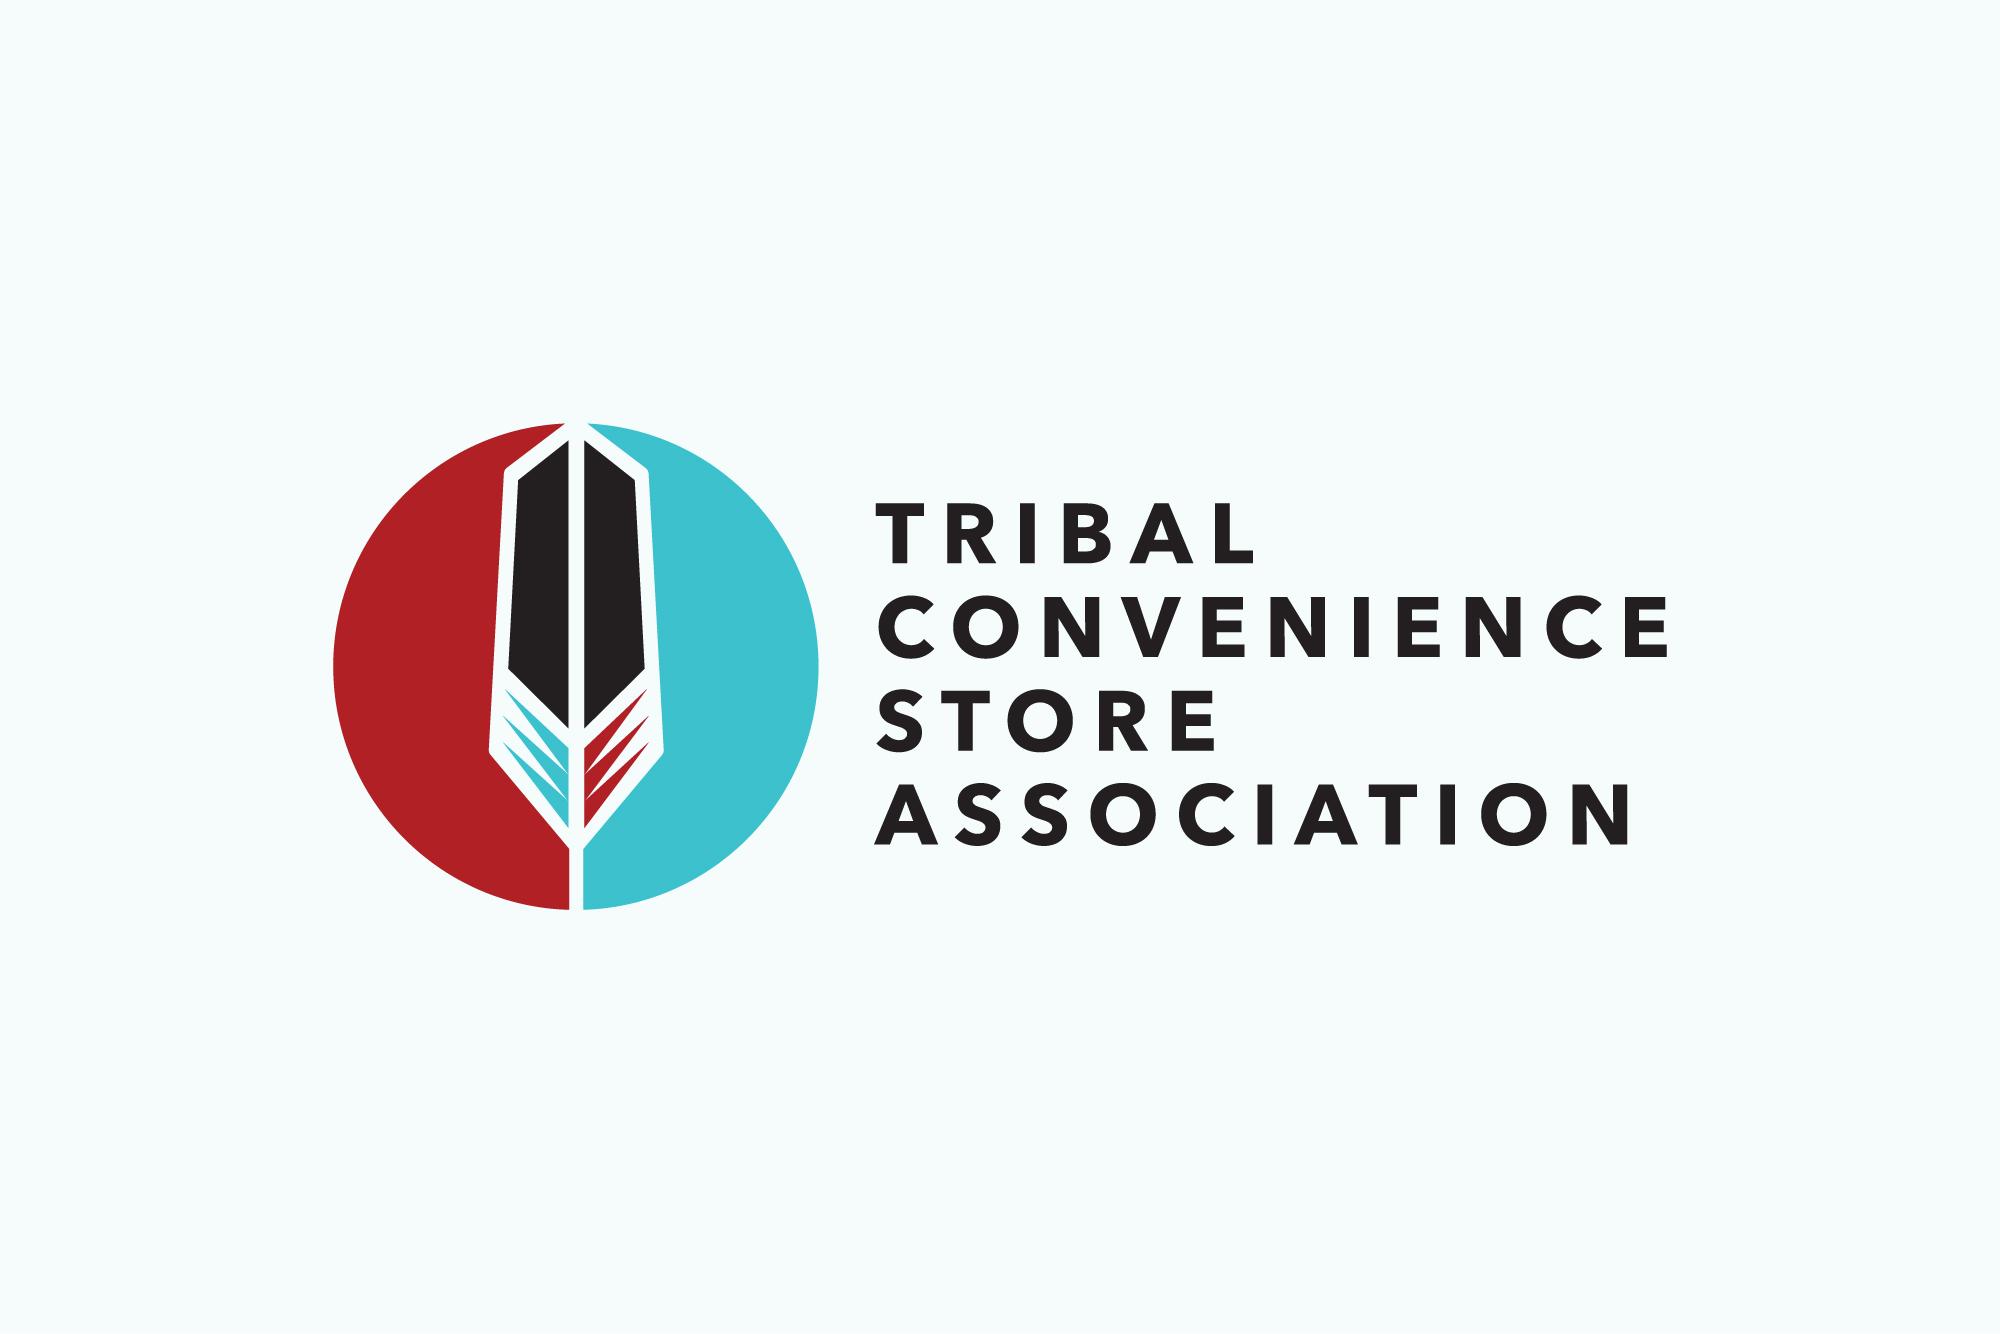 Tribal Convenience Store Association (TCSA) logo